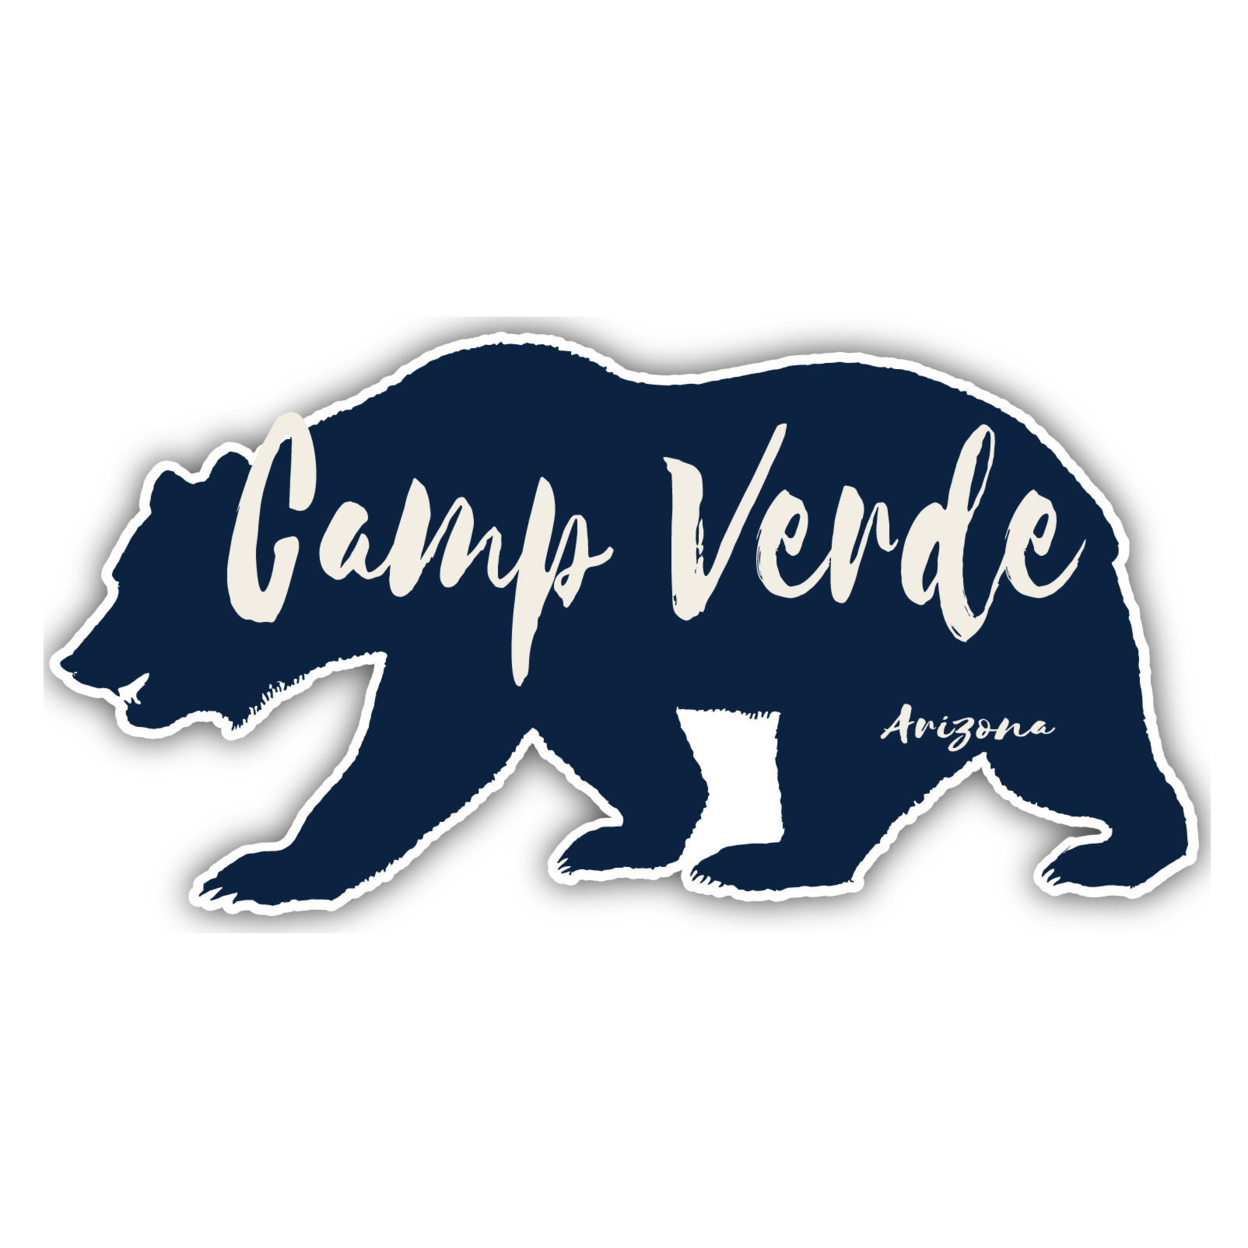 Camp Verde Arizona Souvenir Decorative Stickers (Choose Theme And Size) - Single Unit, 10-Inch, Tent